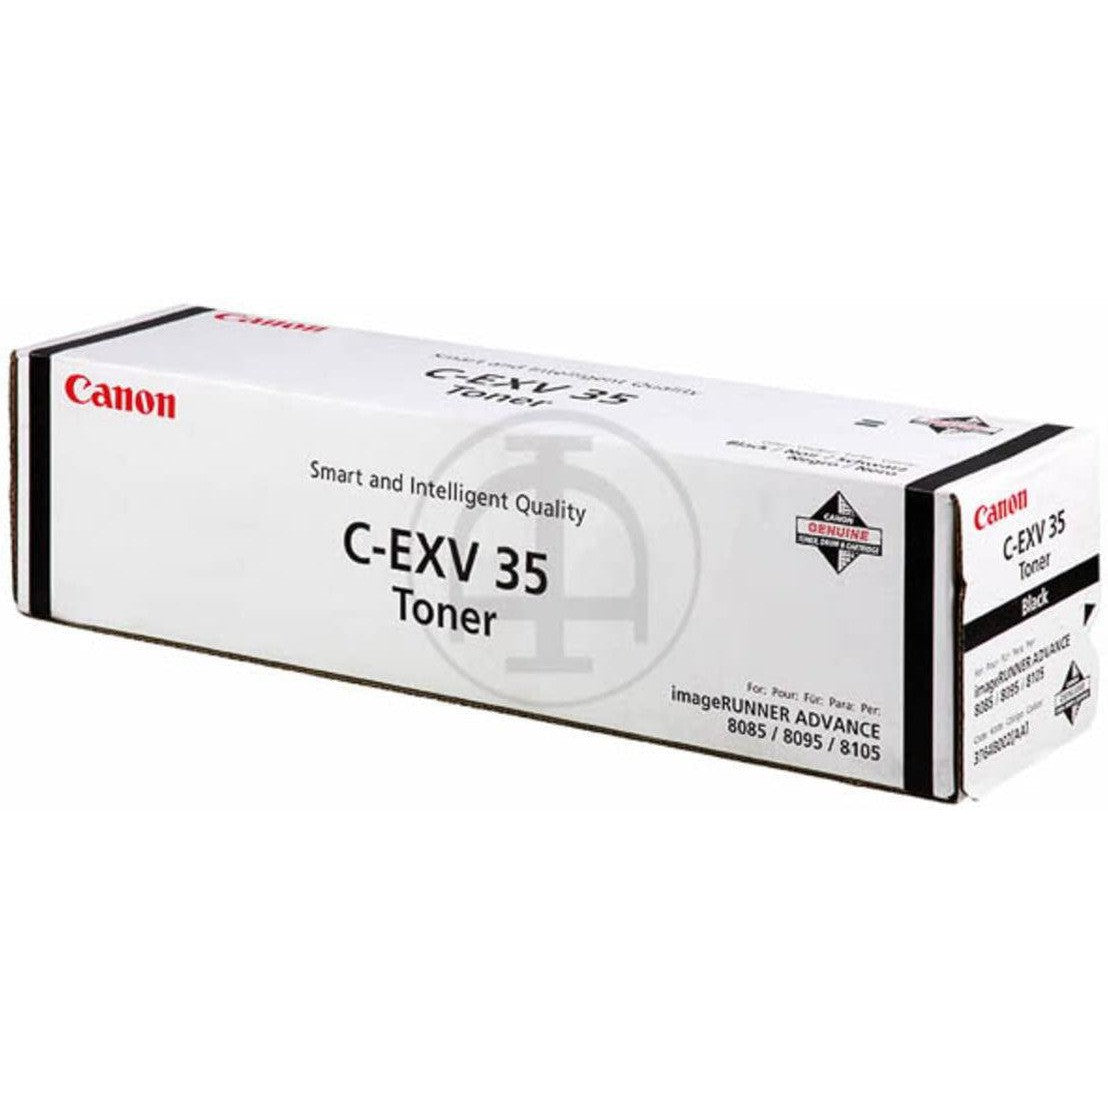 Canon Toner C-Exv 35 Black-Inks And Toners-Canon-Star Light Kuwait